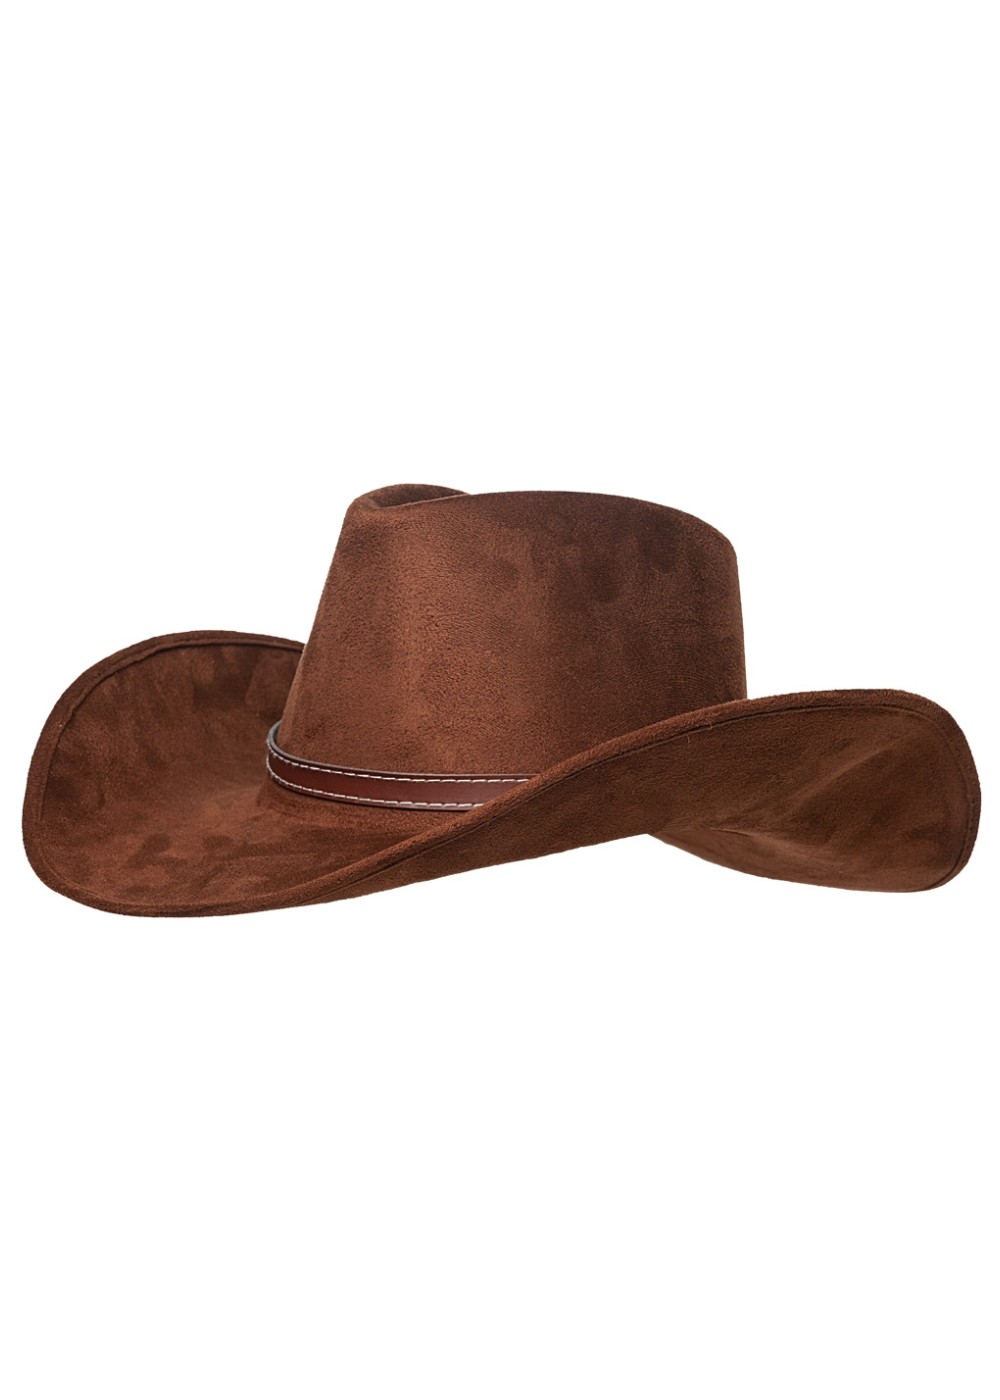 Faux Suede Brown Cowboy Hat